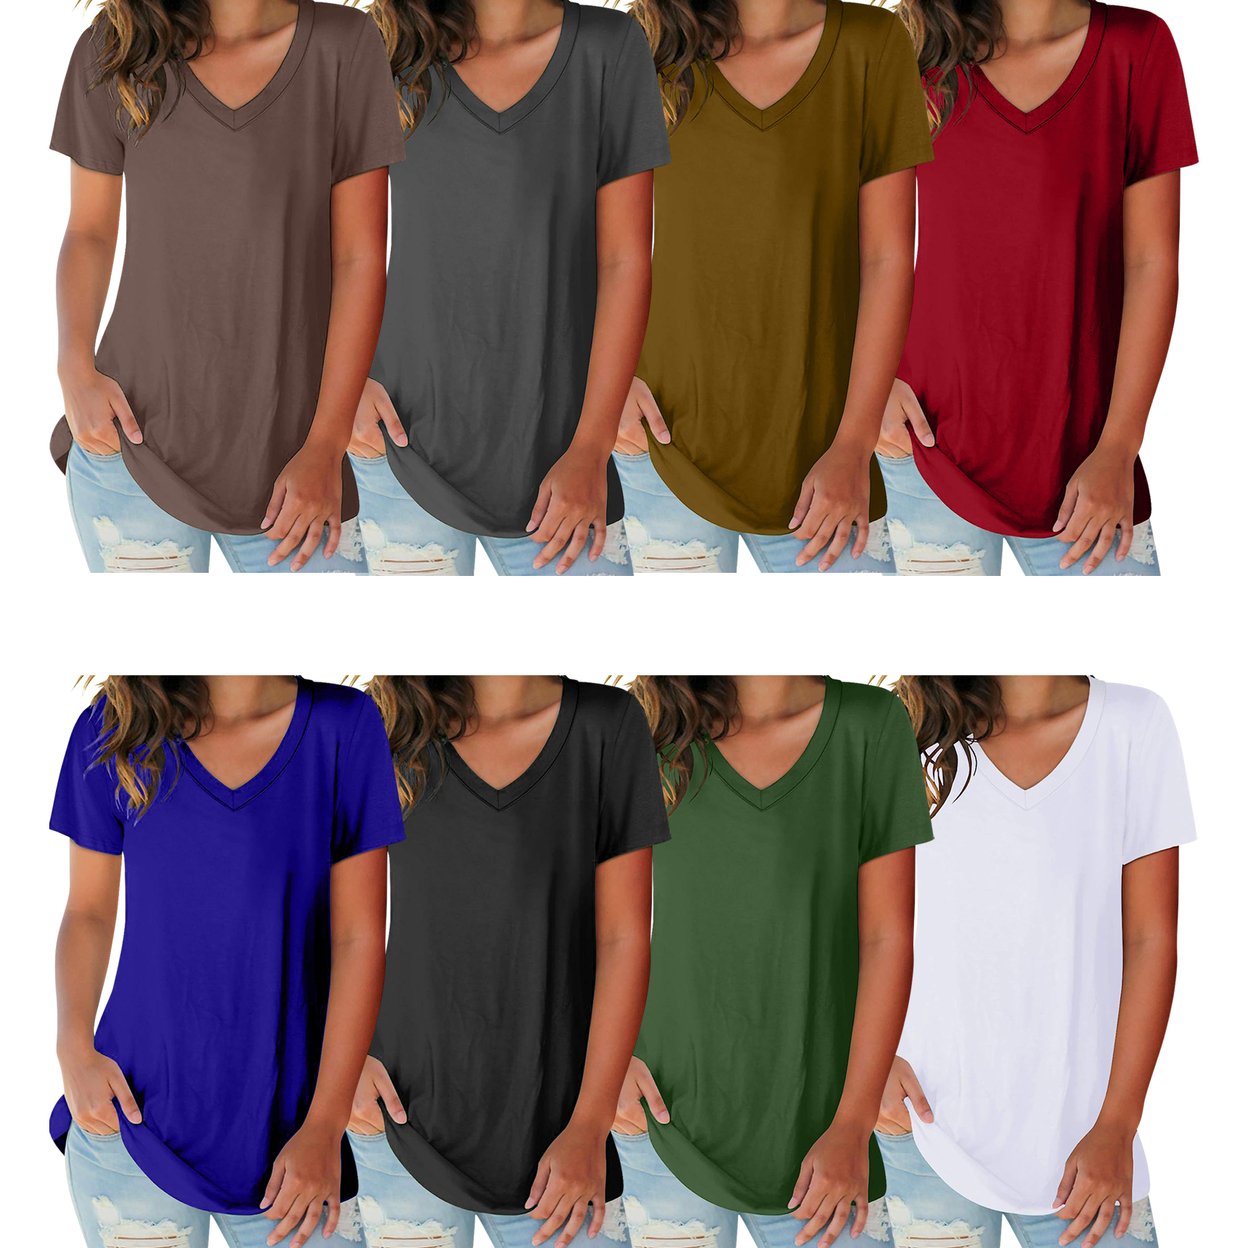 2-Pack: Women's Ultra Soft Smooth Cotton Blend Basic V-Neck Short Sleeve Shirts - Grey & Green, X-large